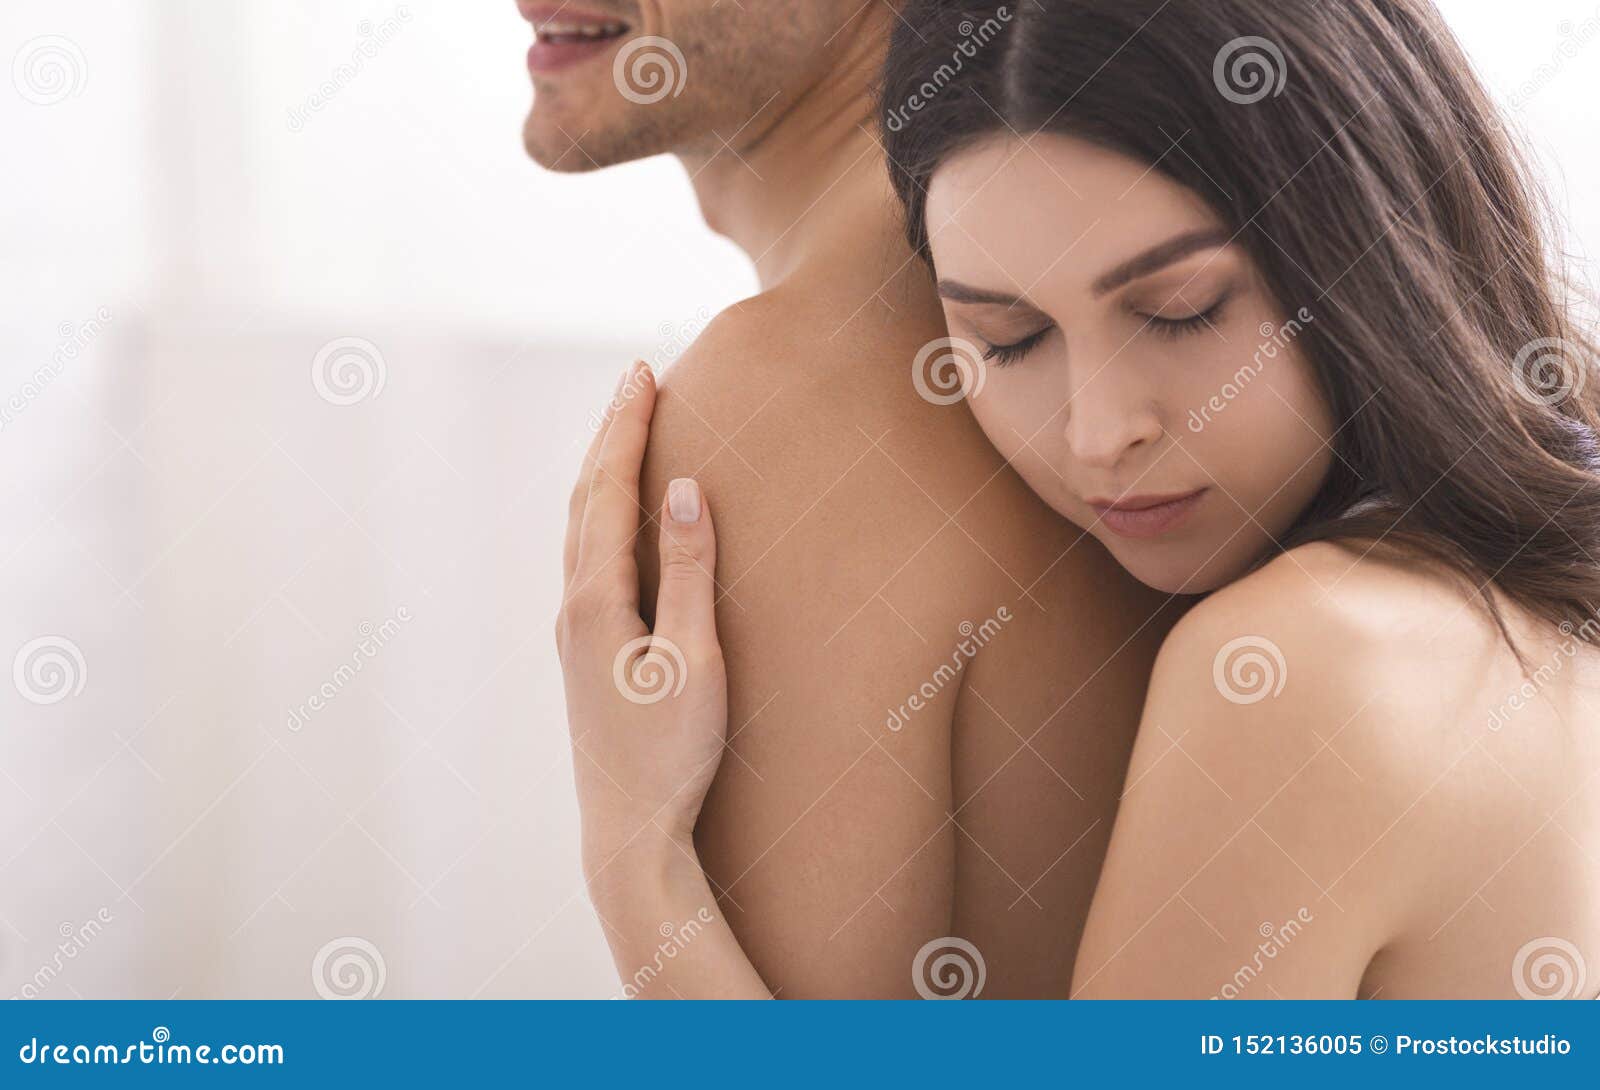 Bedroom Sex Nude Couple